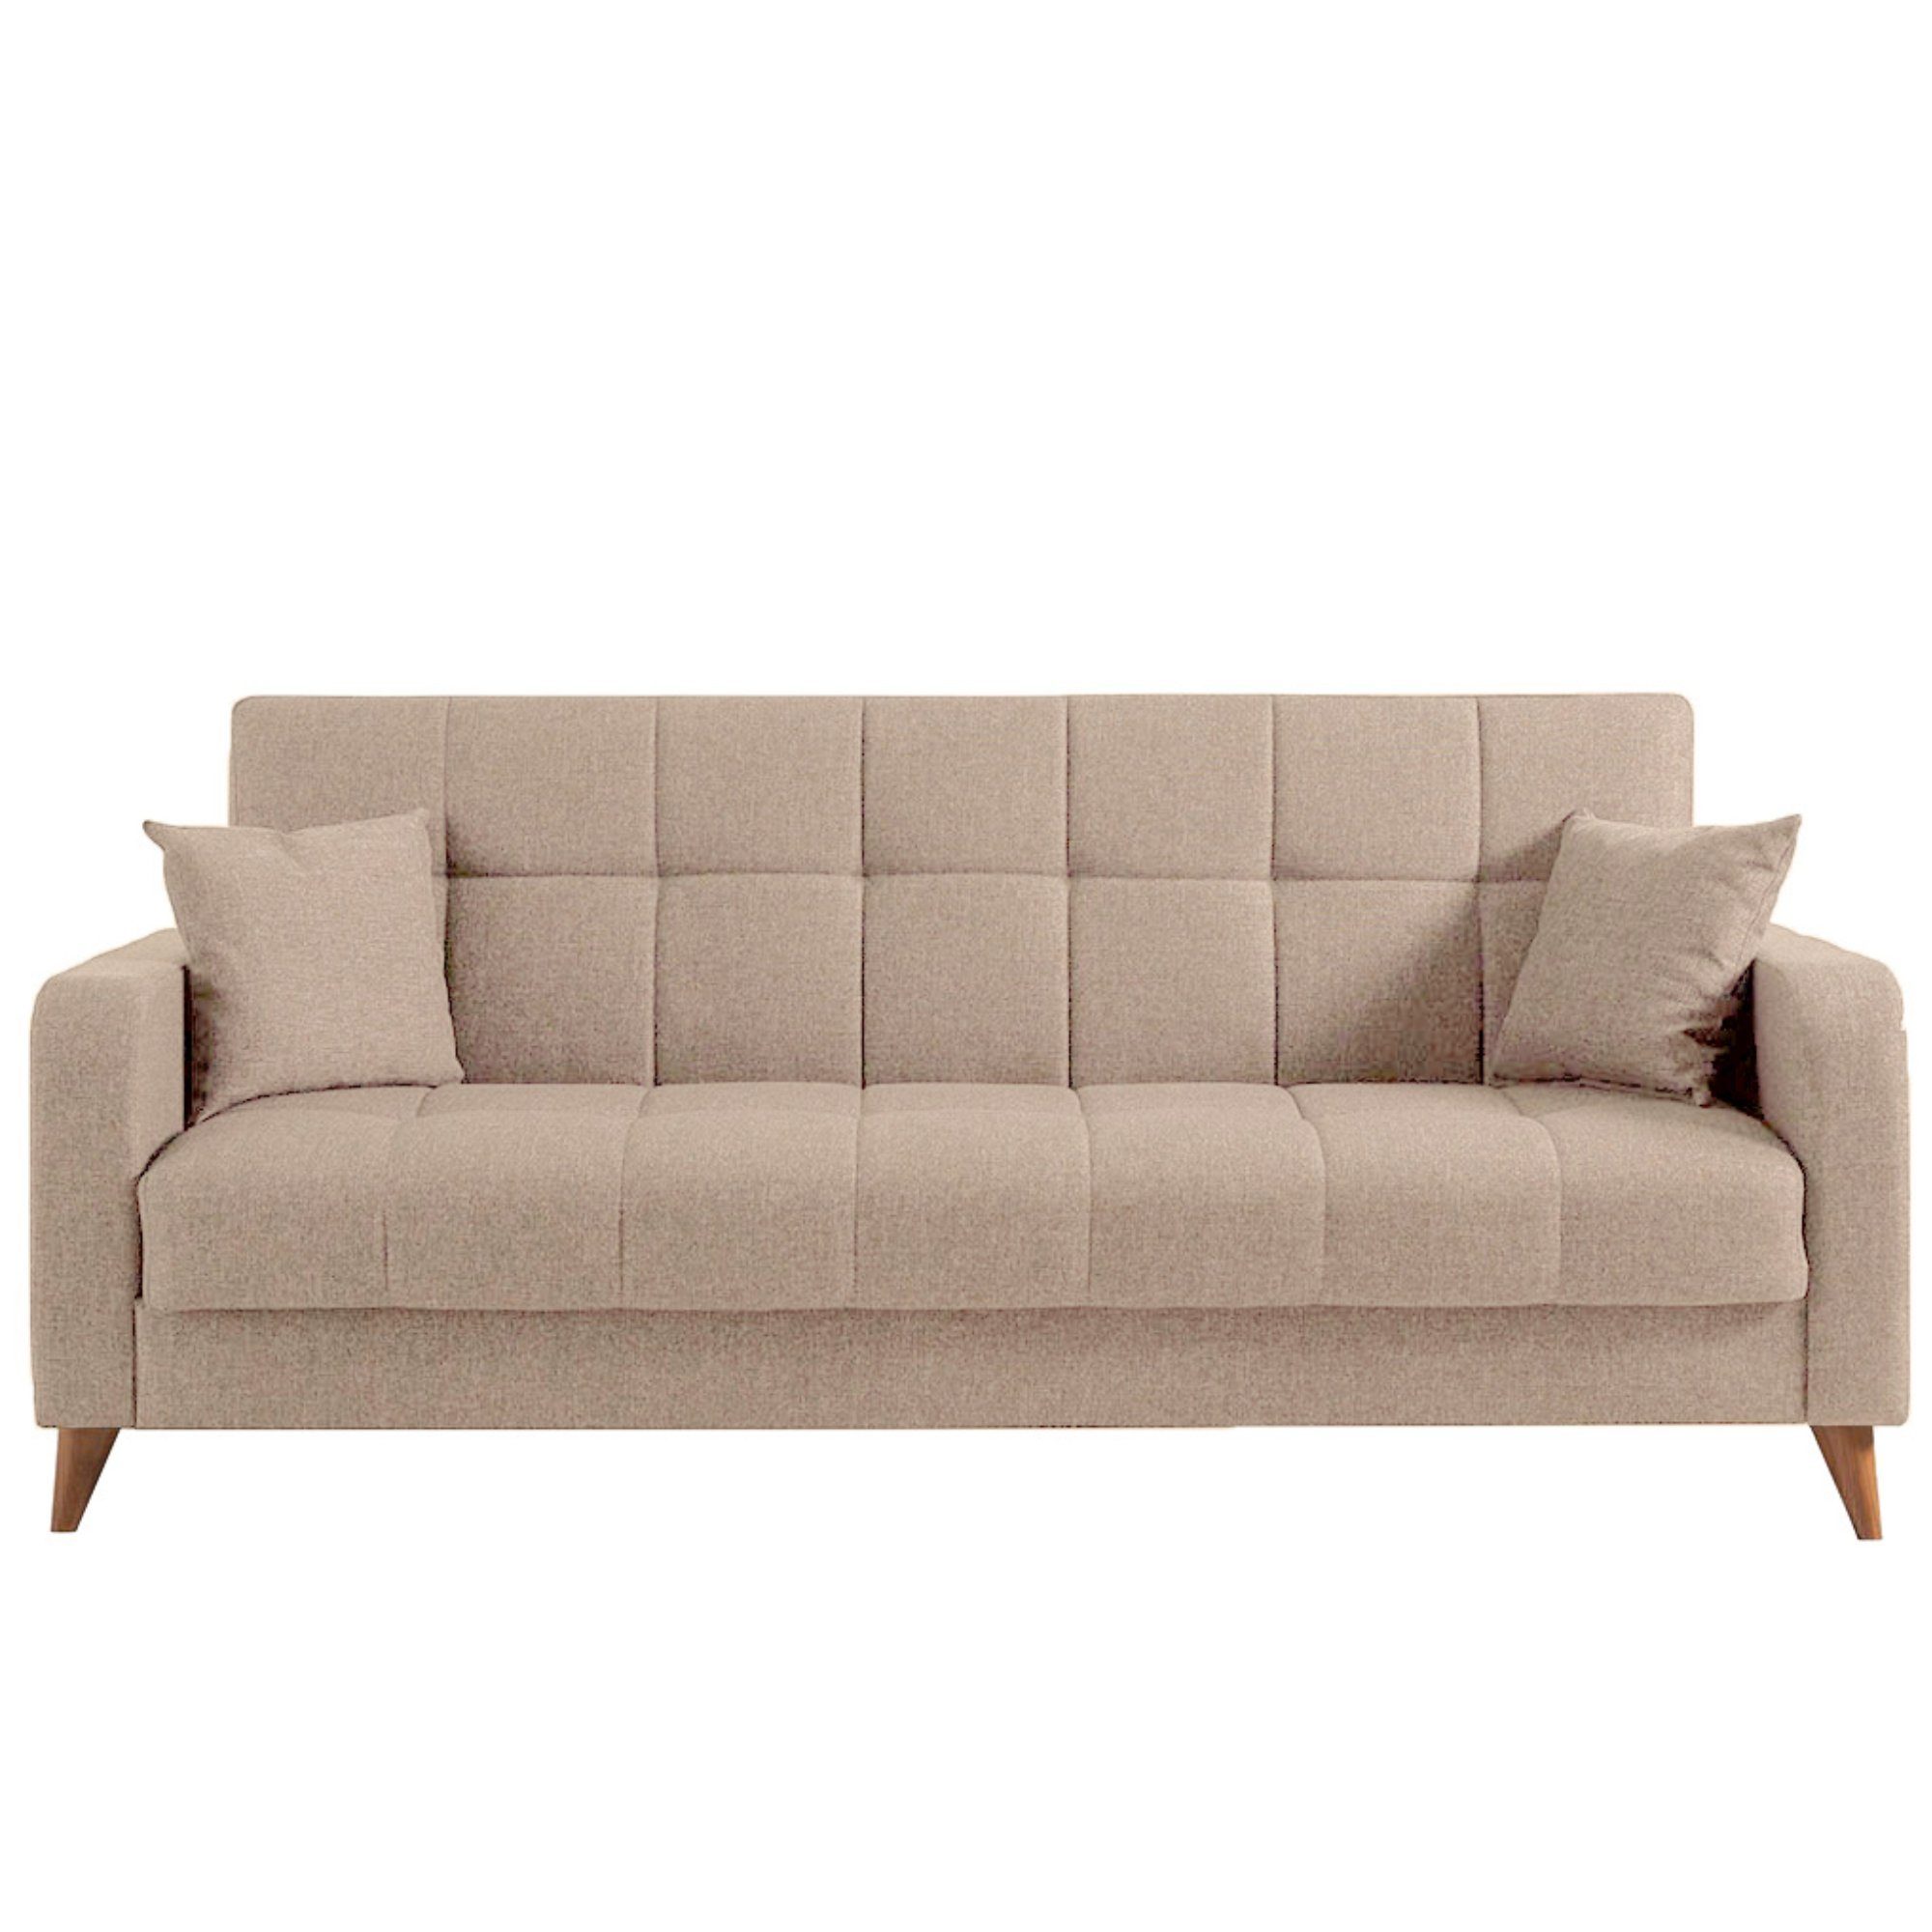 Gozos Sofa Gozos Beige x Sitzer Polybaumwolle, Couch 219 x Series Bilbao 98 90 Bettfunktion cm 3 Sofa